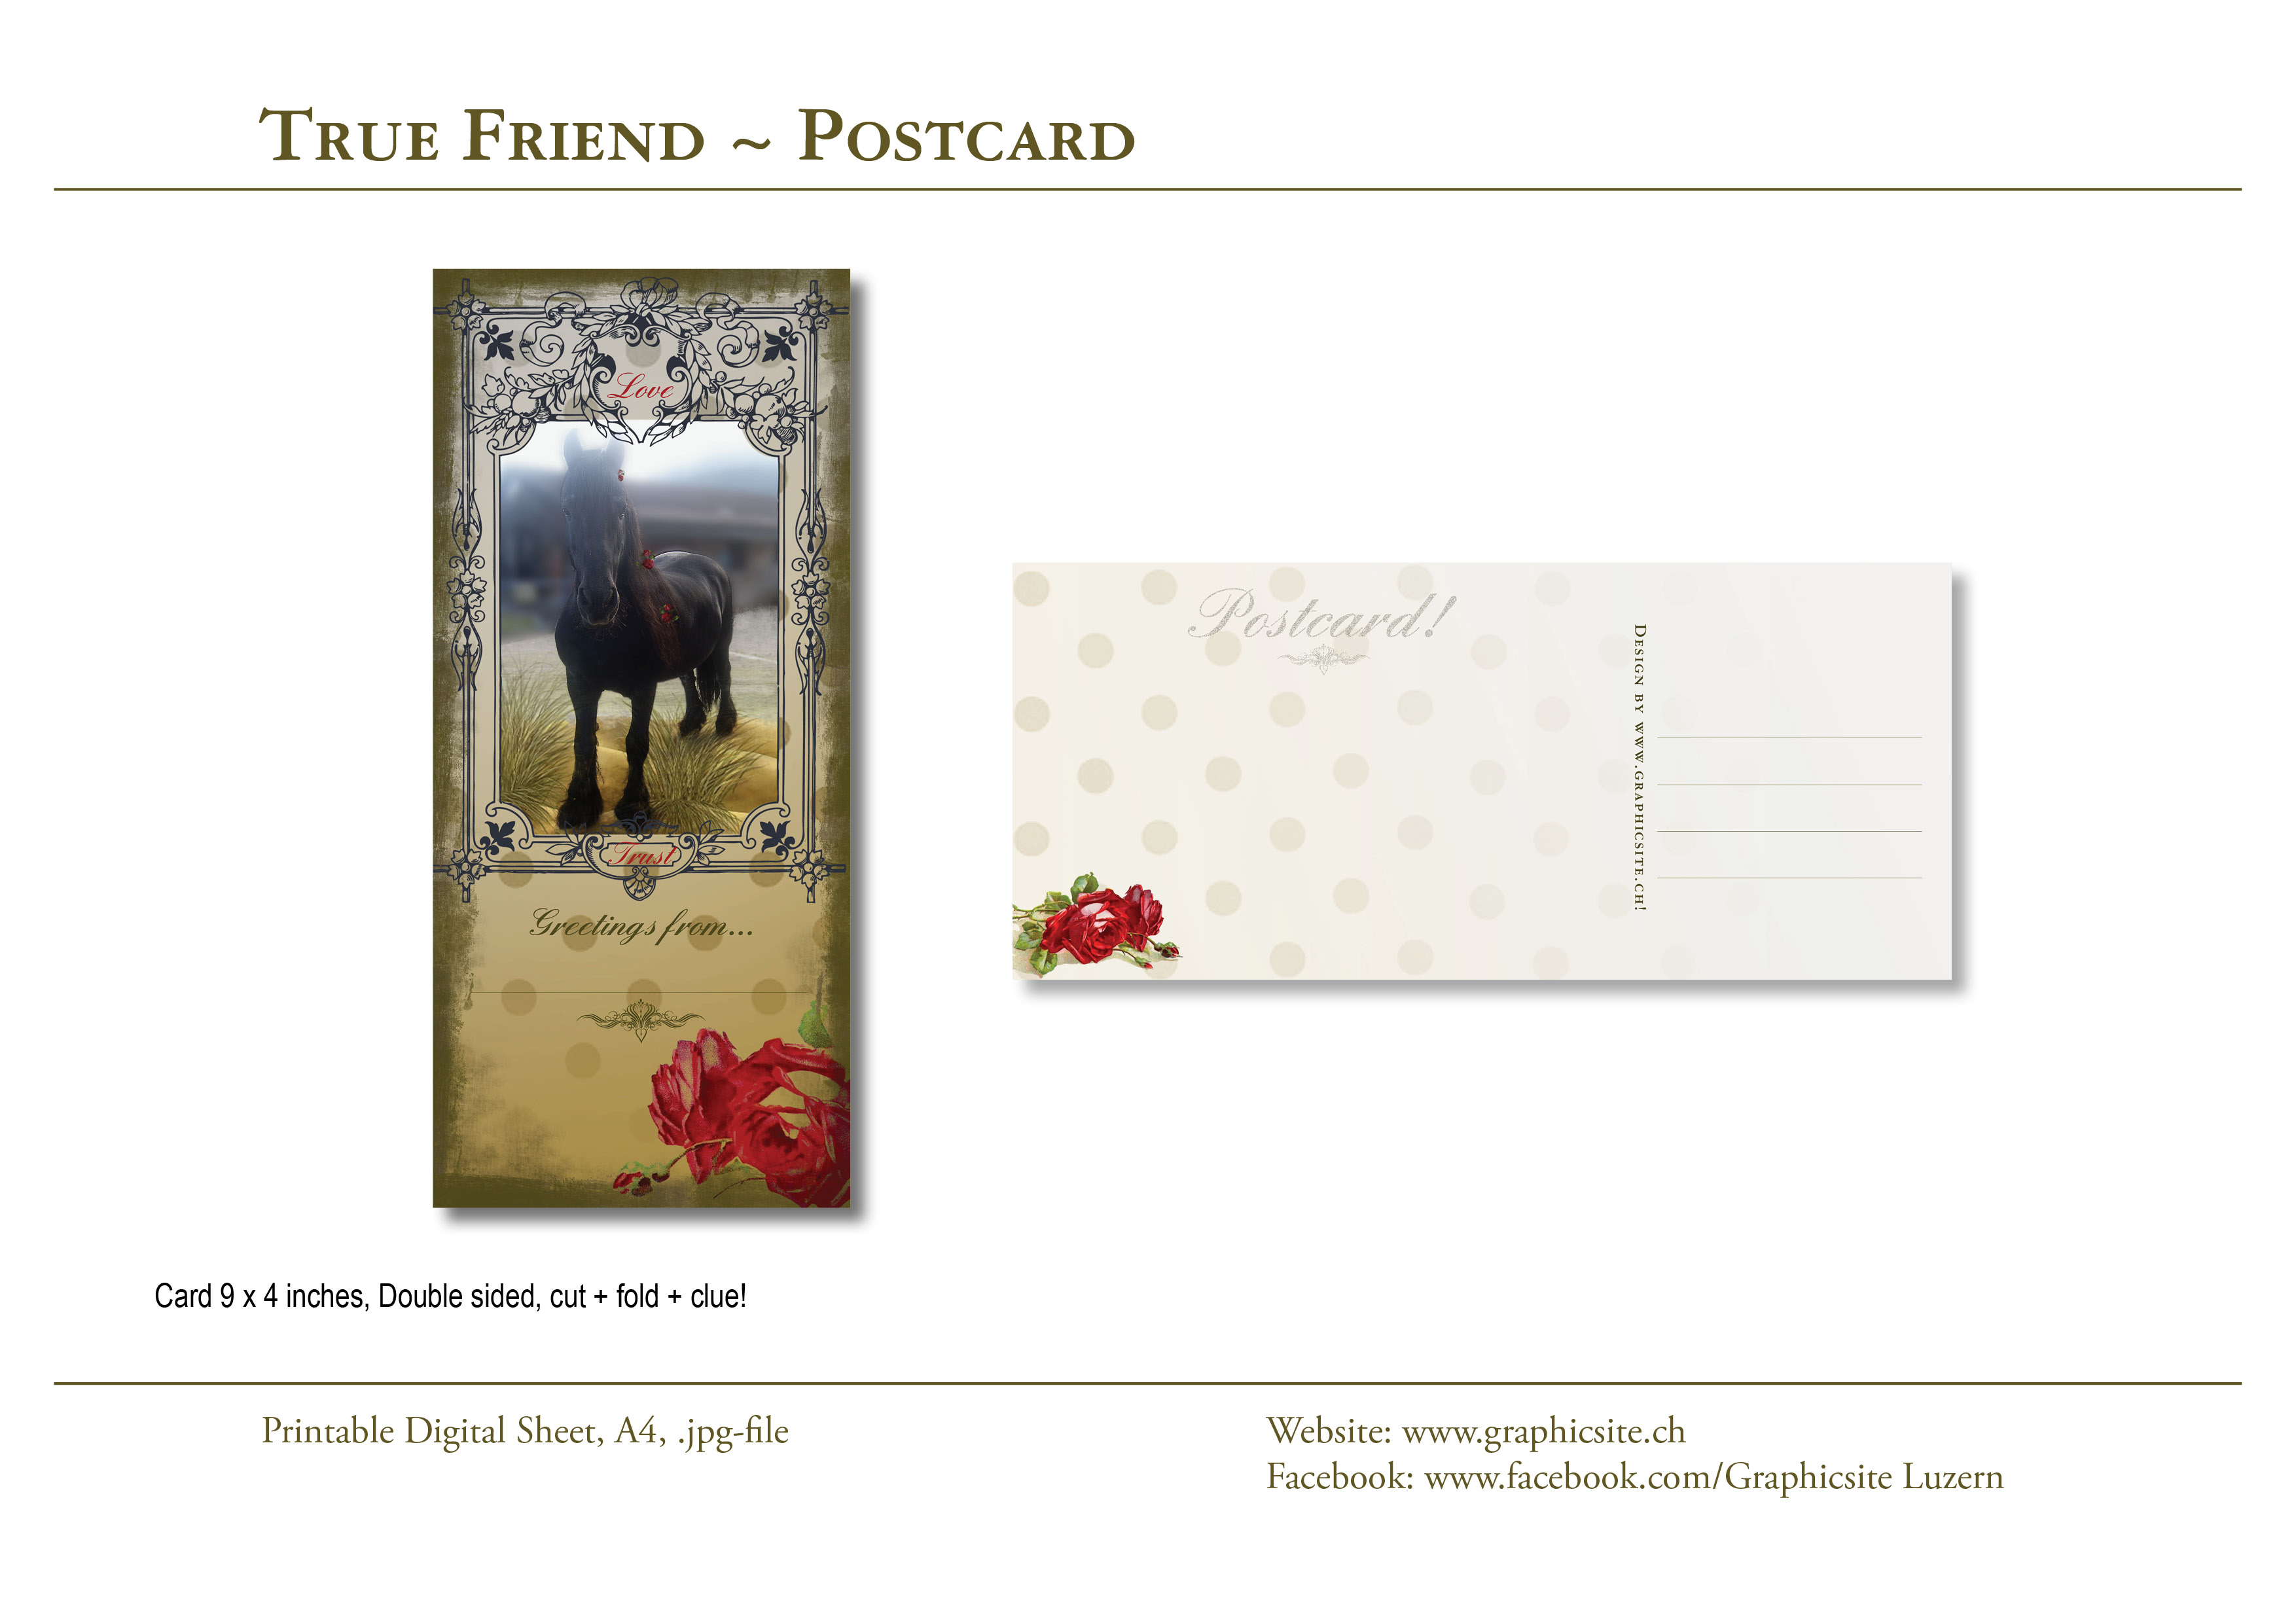 Printable Digital Sheets - Postcard 4x9inches - TrueFriend, #cards, #postcard, #greetingcard